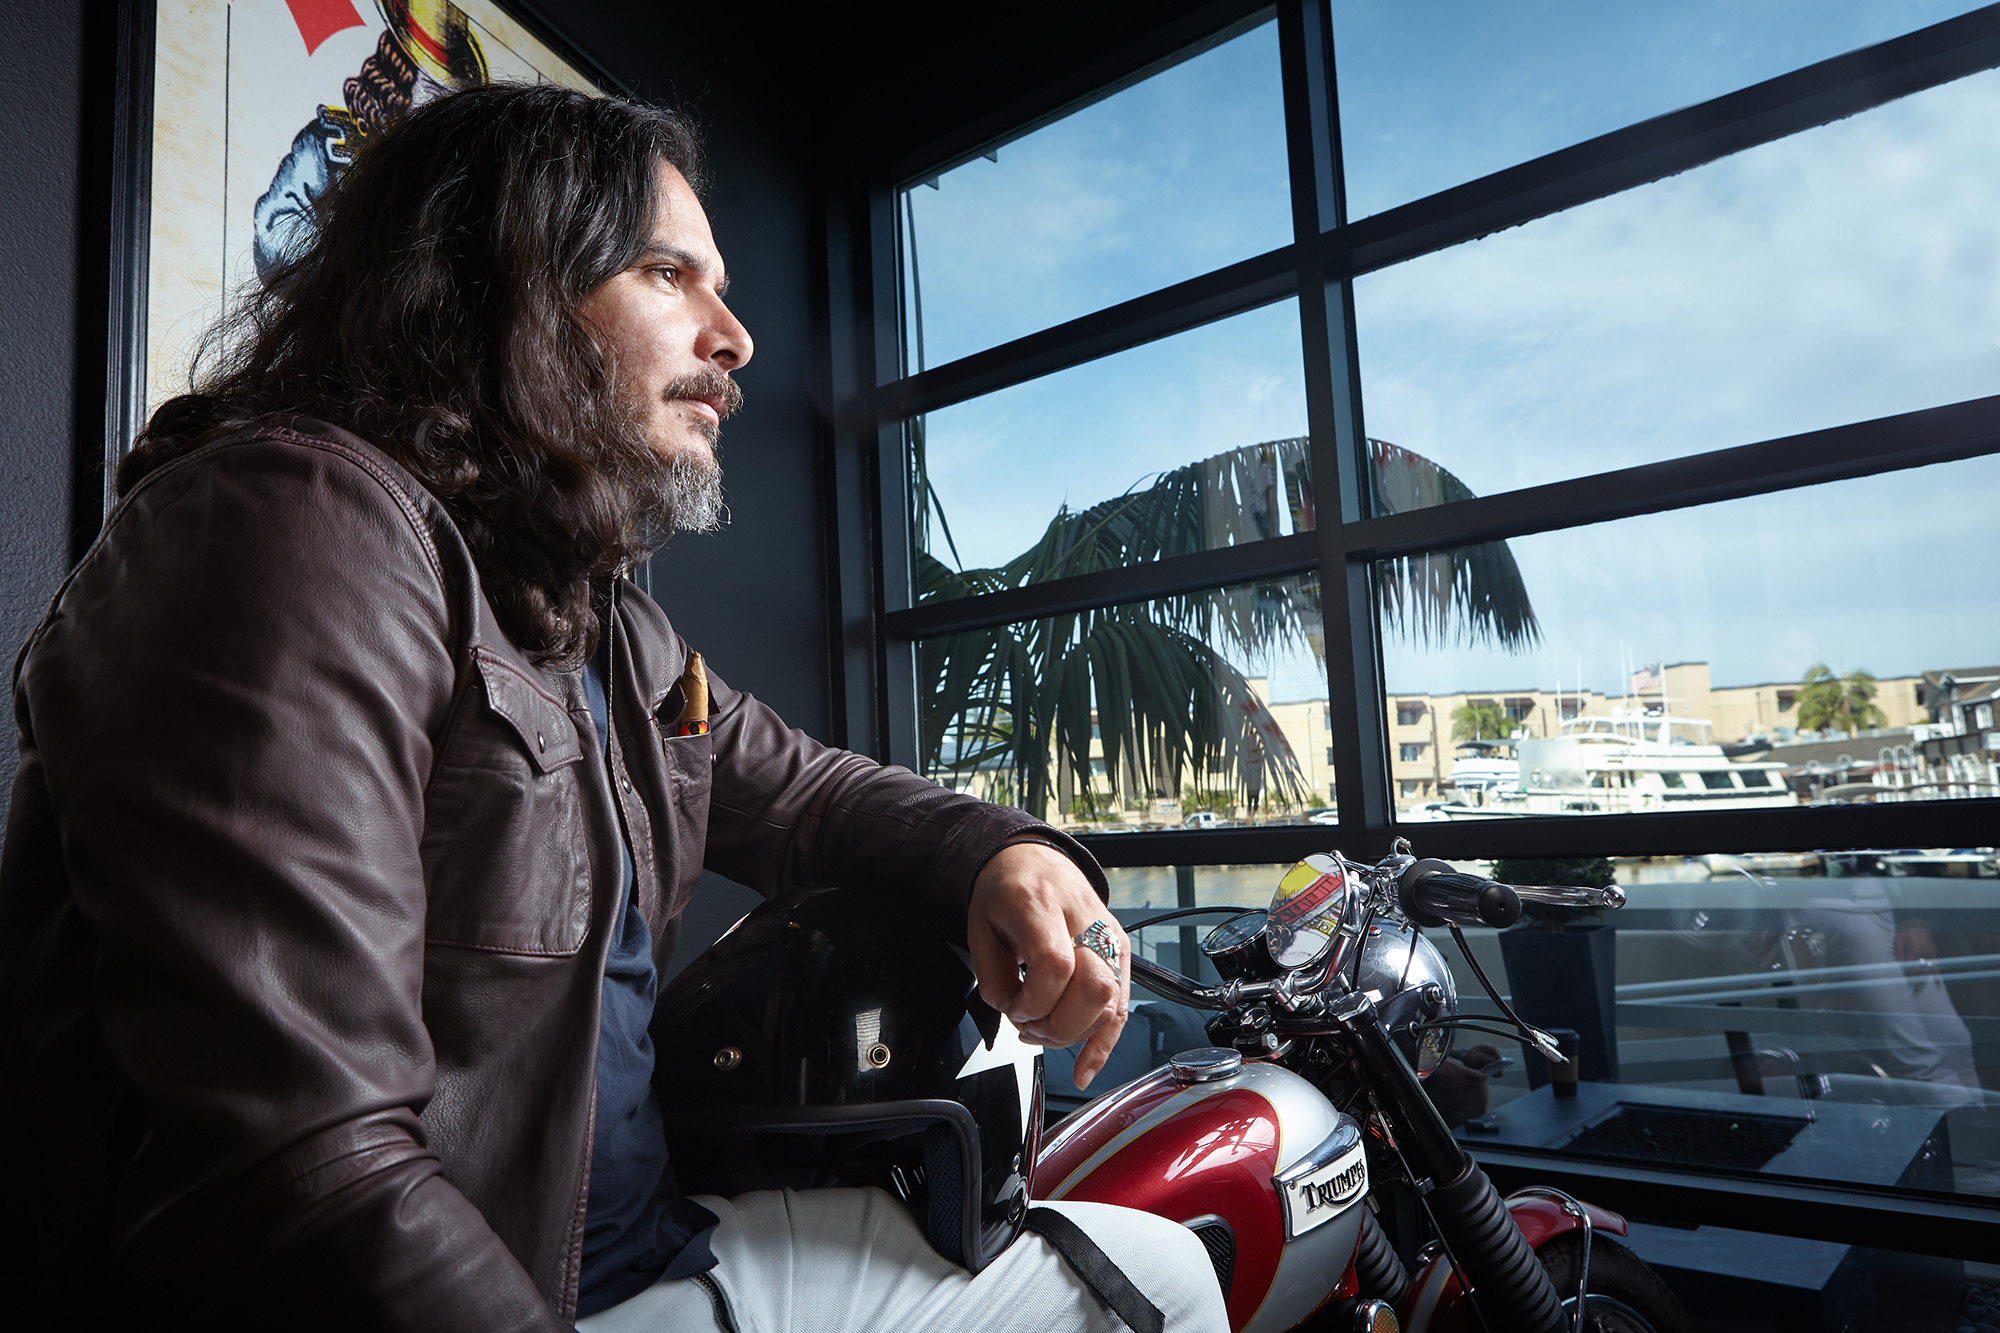 Martin Majano sitting on a Triumph motorcycle